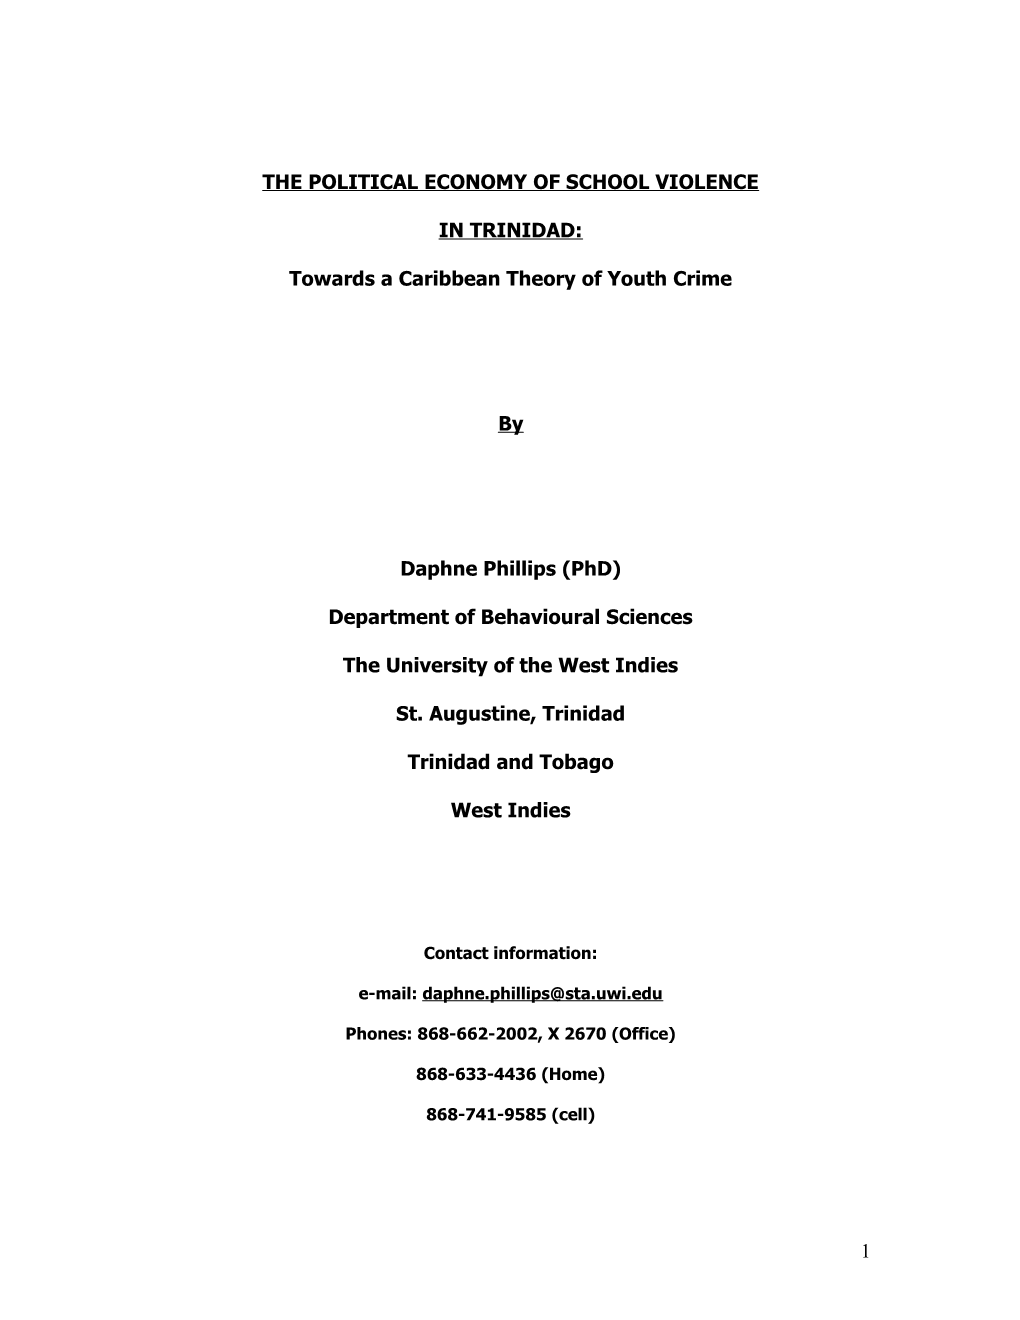 The Political Economy of Schoolviolence